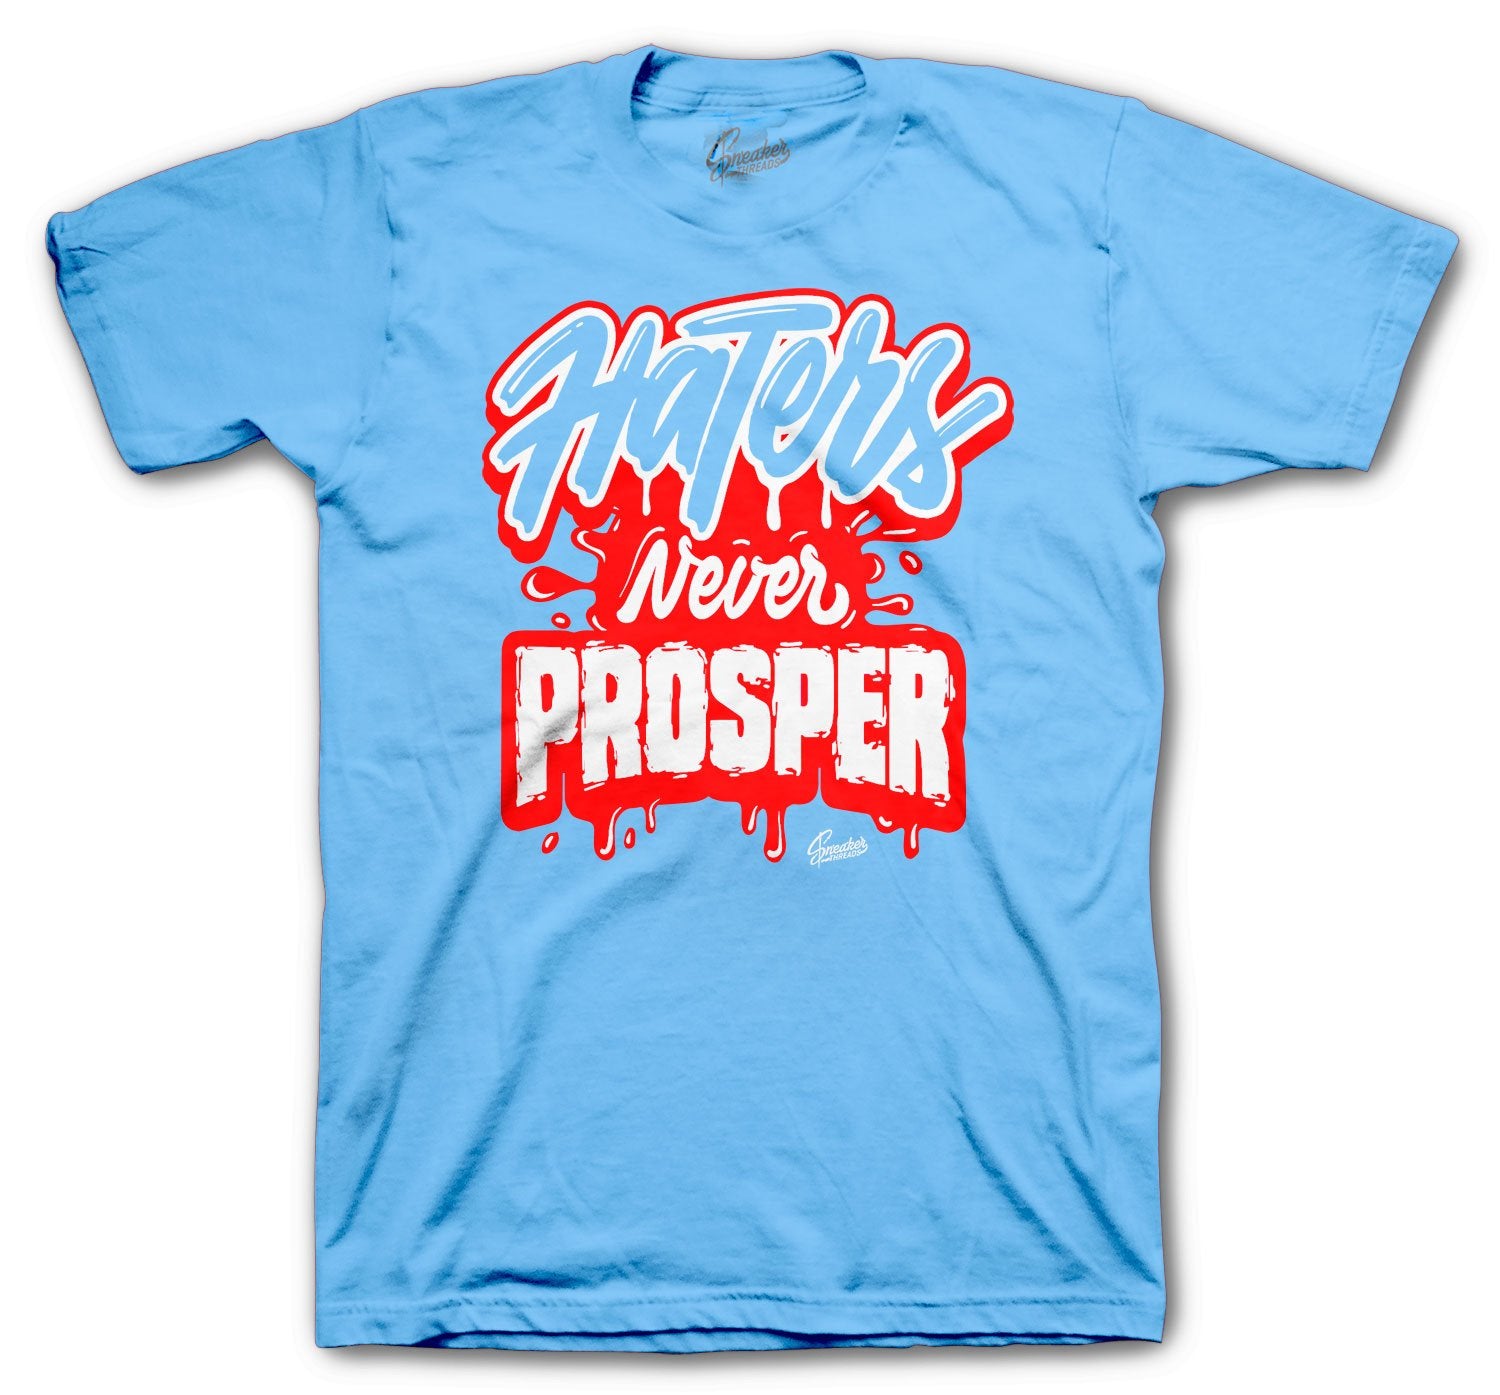 Jordan 1 Fearless Prosper Shirt for sneaker release